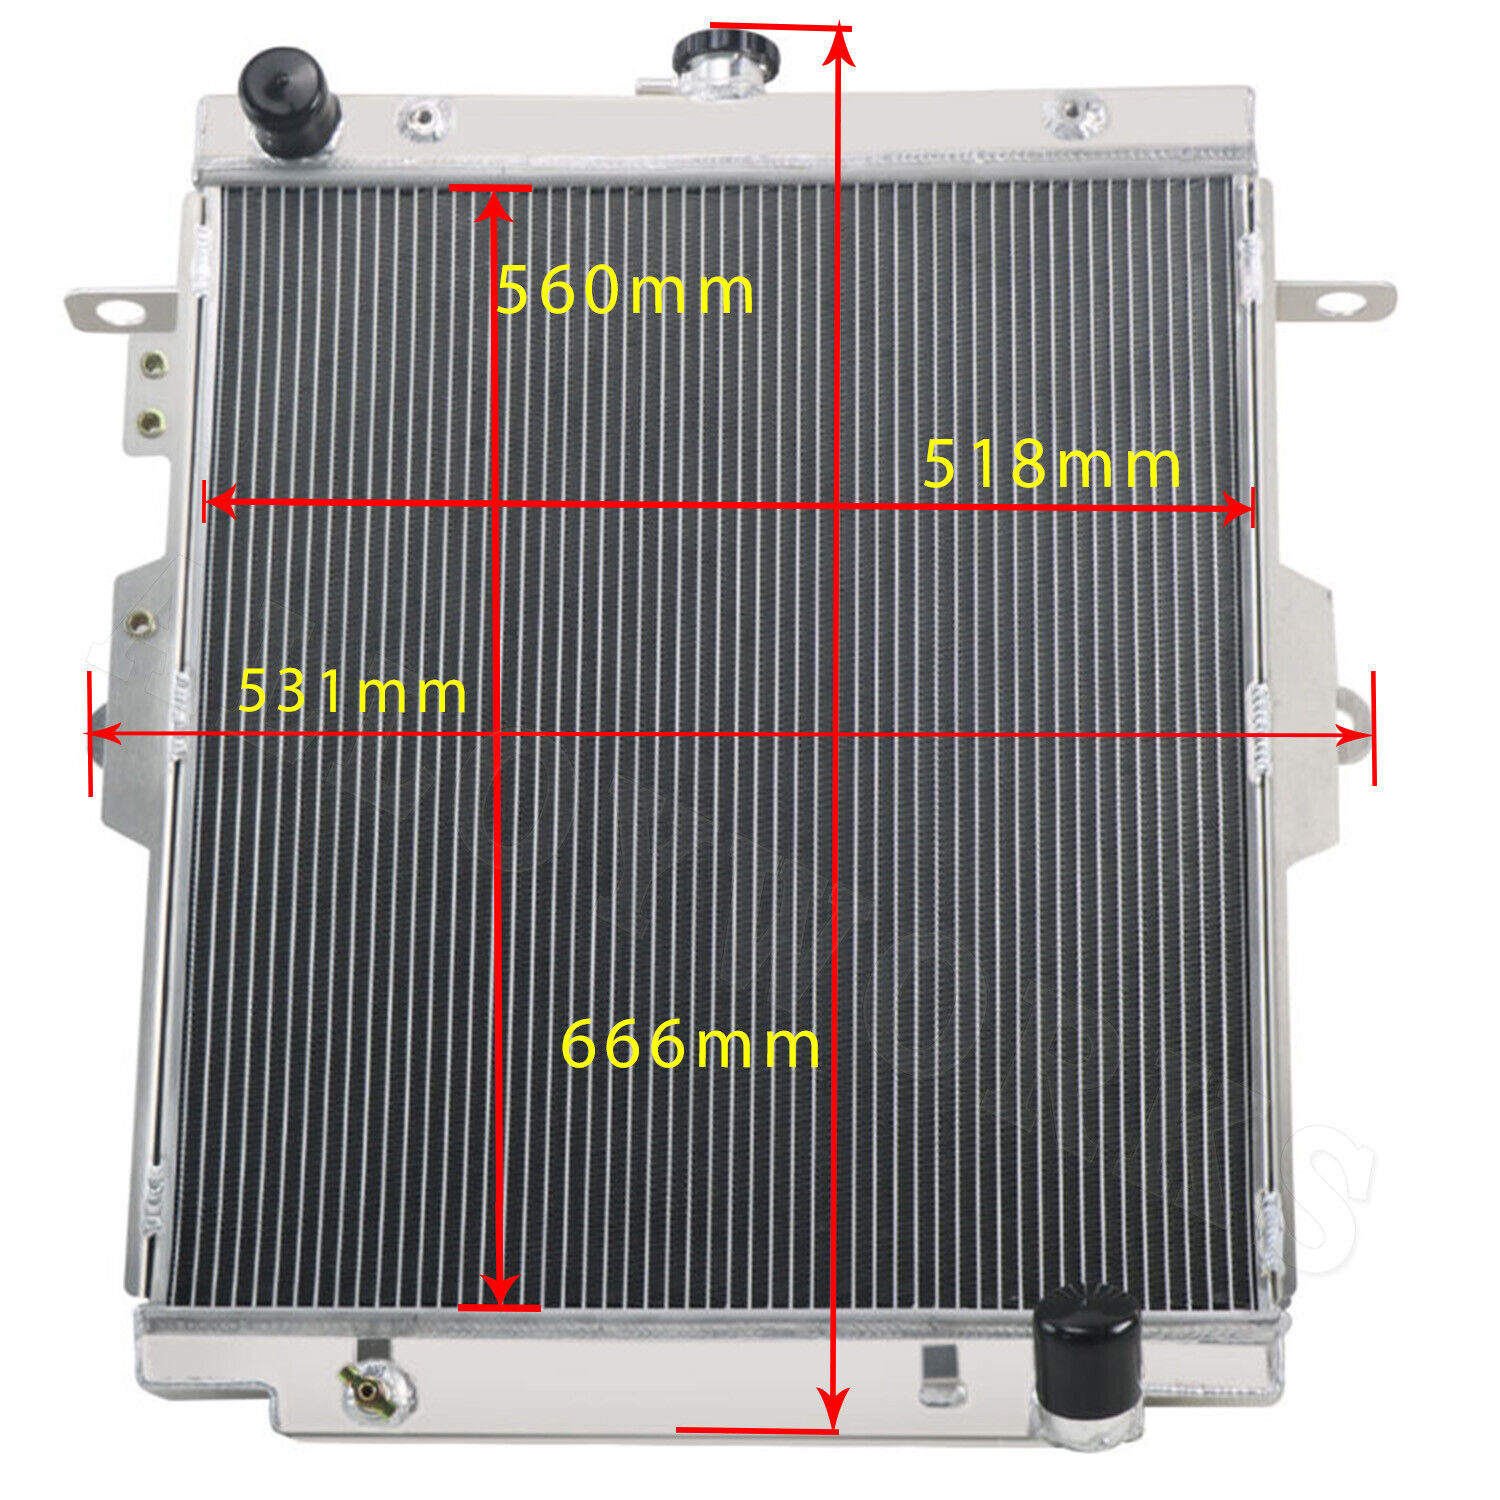 ASI 4 Row Aluminium universal Radiator Core Size: 518W * 560H mm